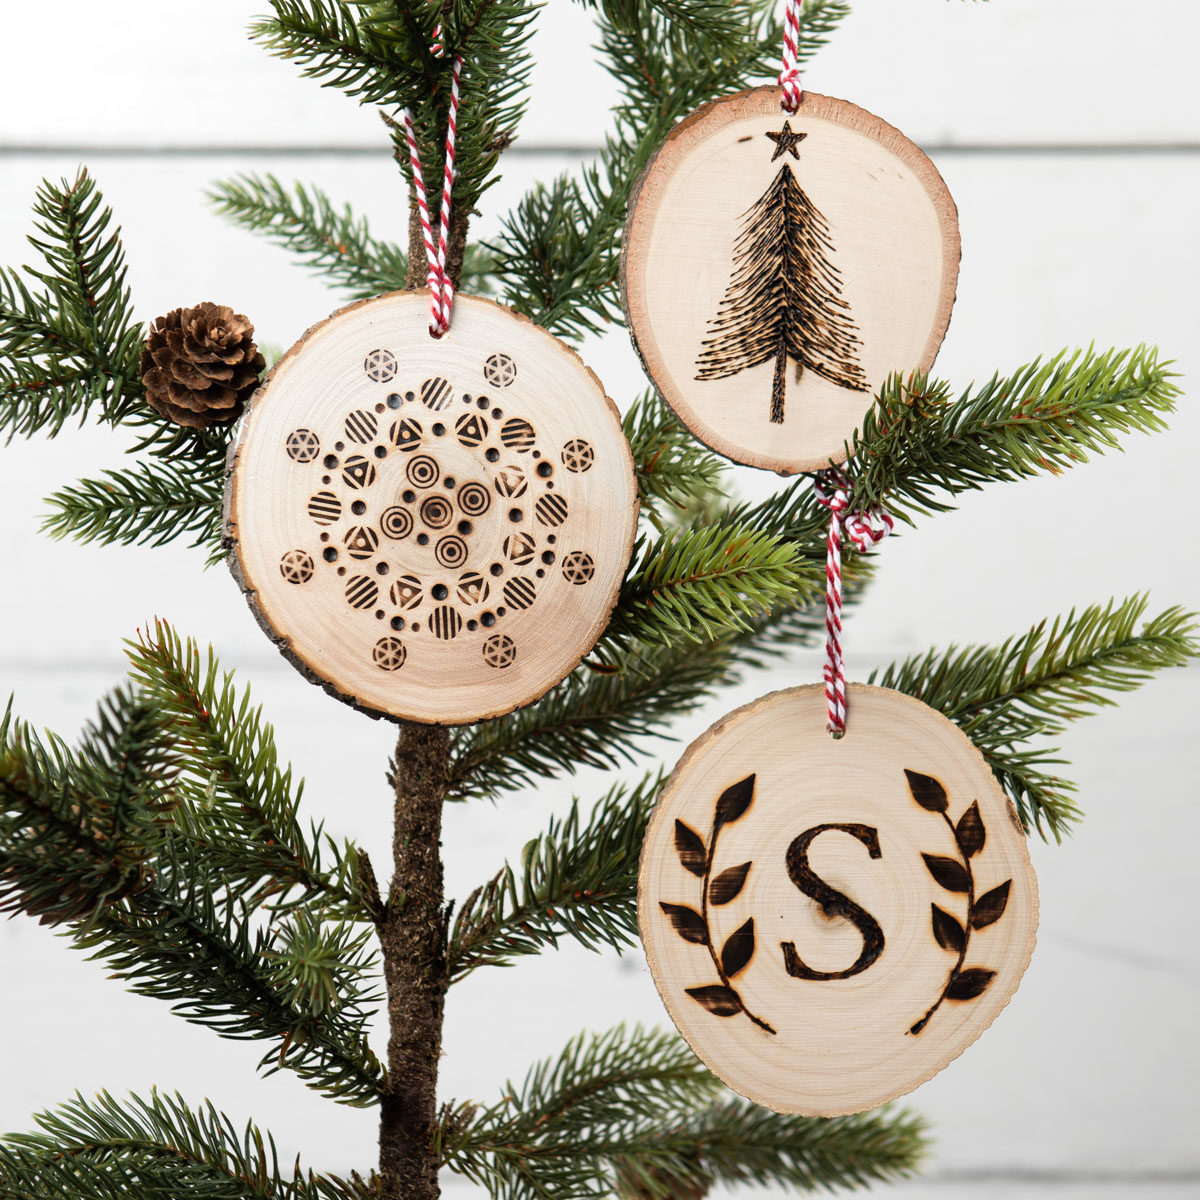 DIY Wood Burned Christmas Ornaments - Project | Plaid Online